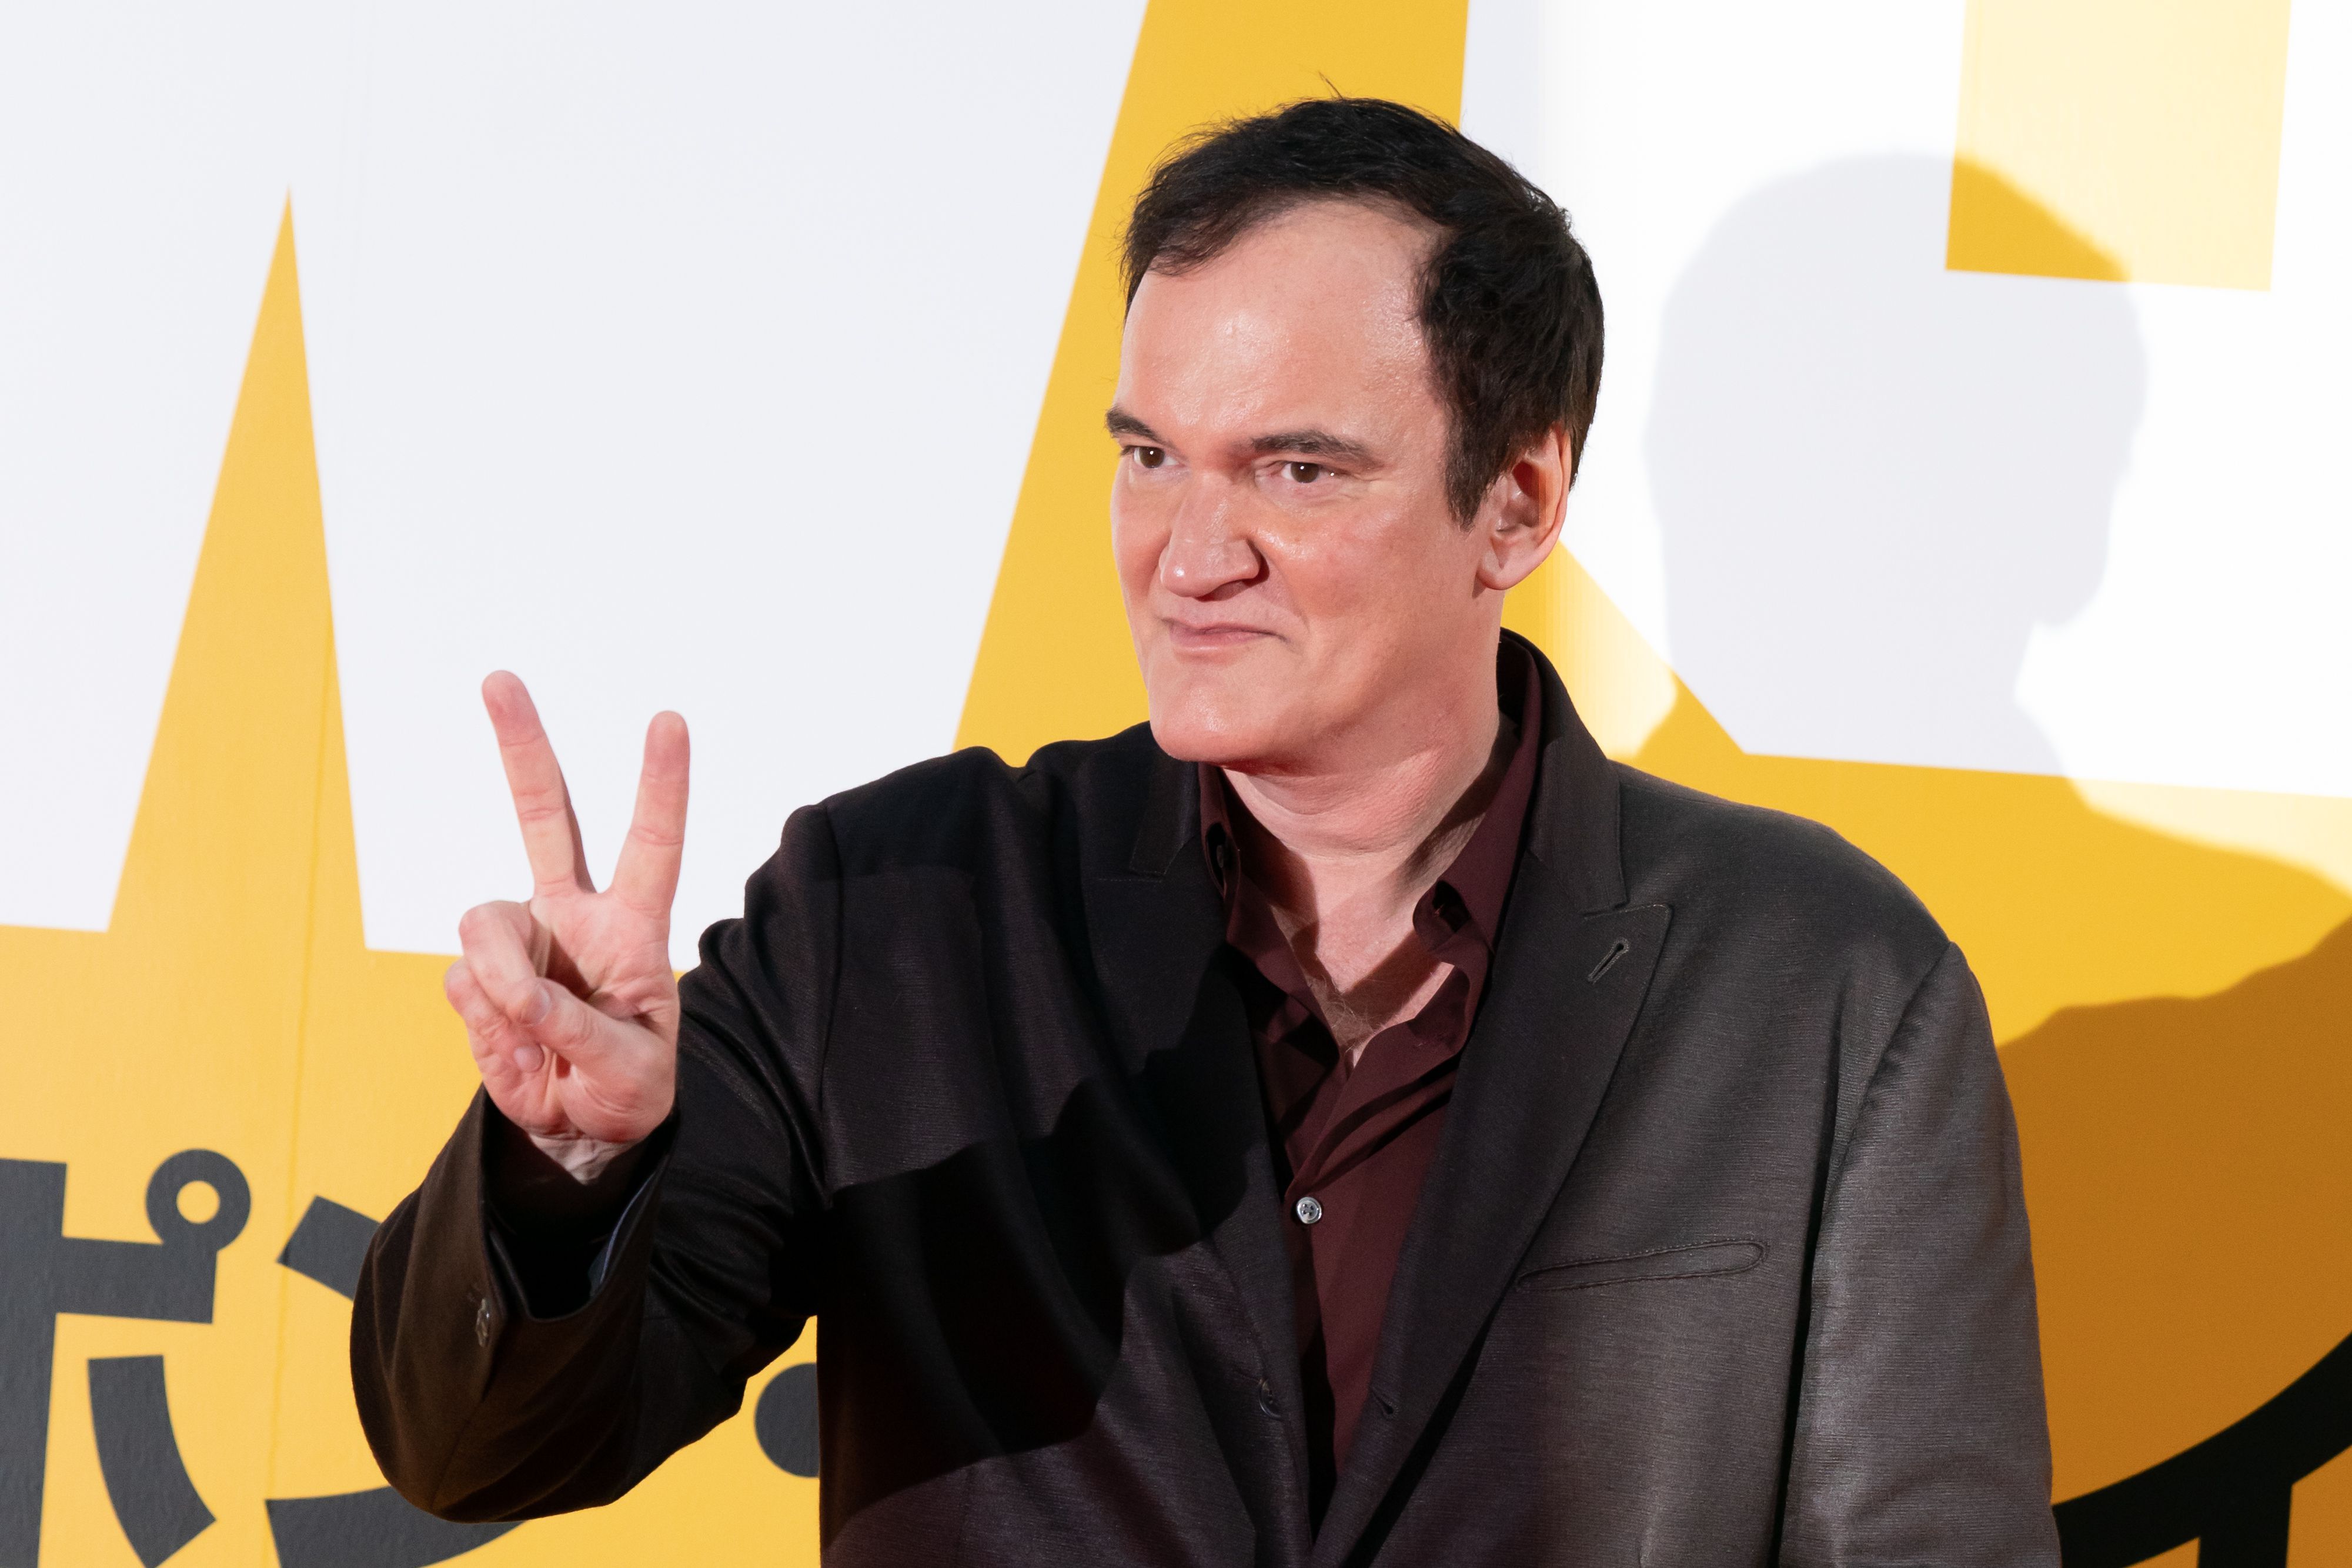 Tarantino HD wallpapers | Pxfuel